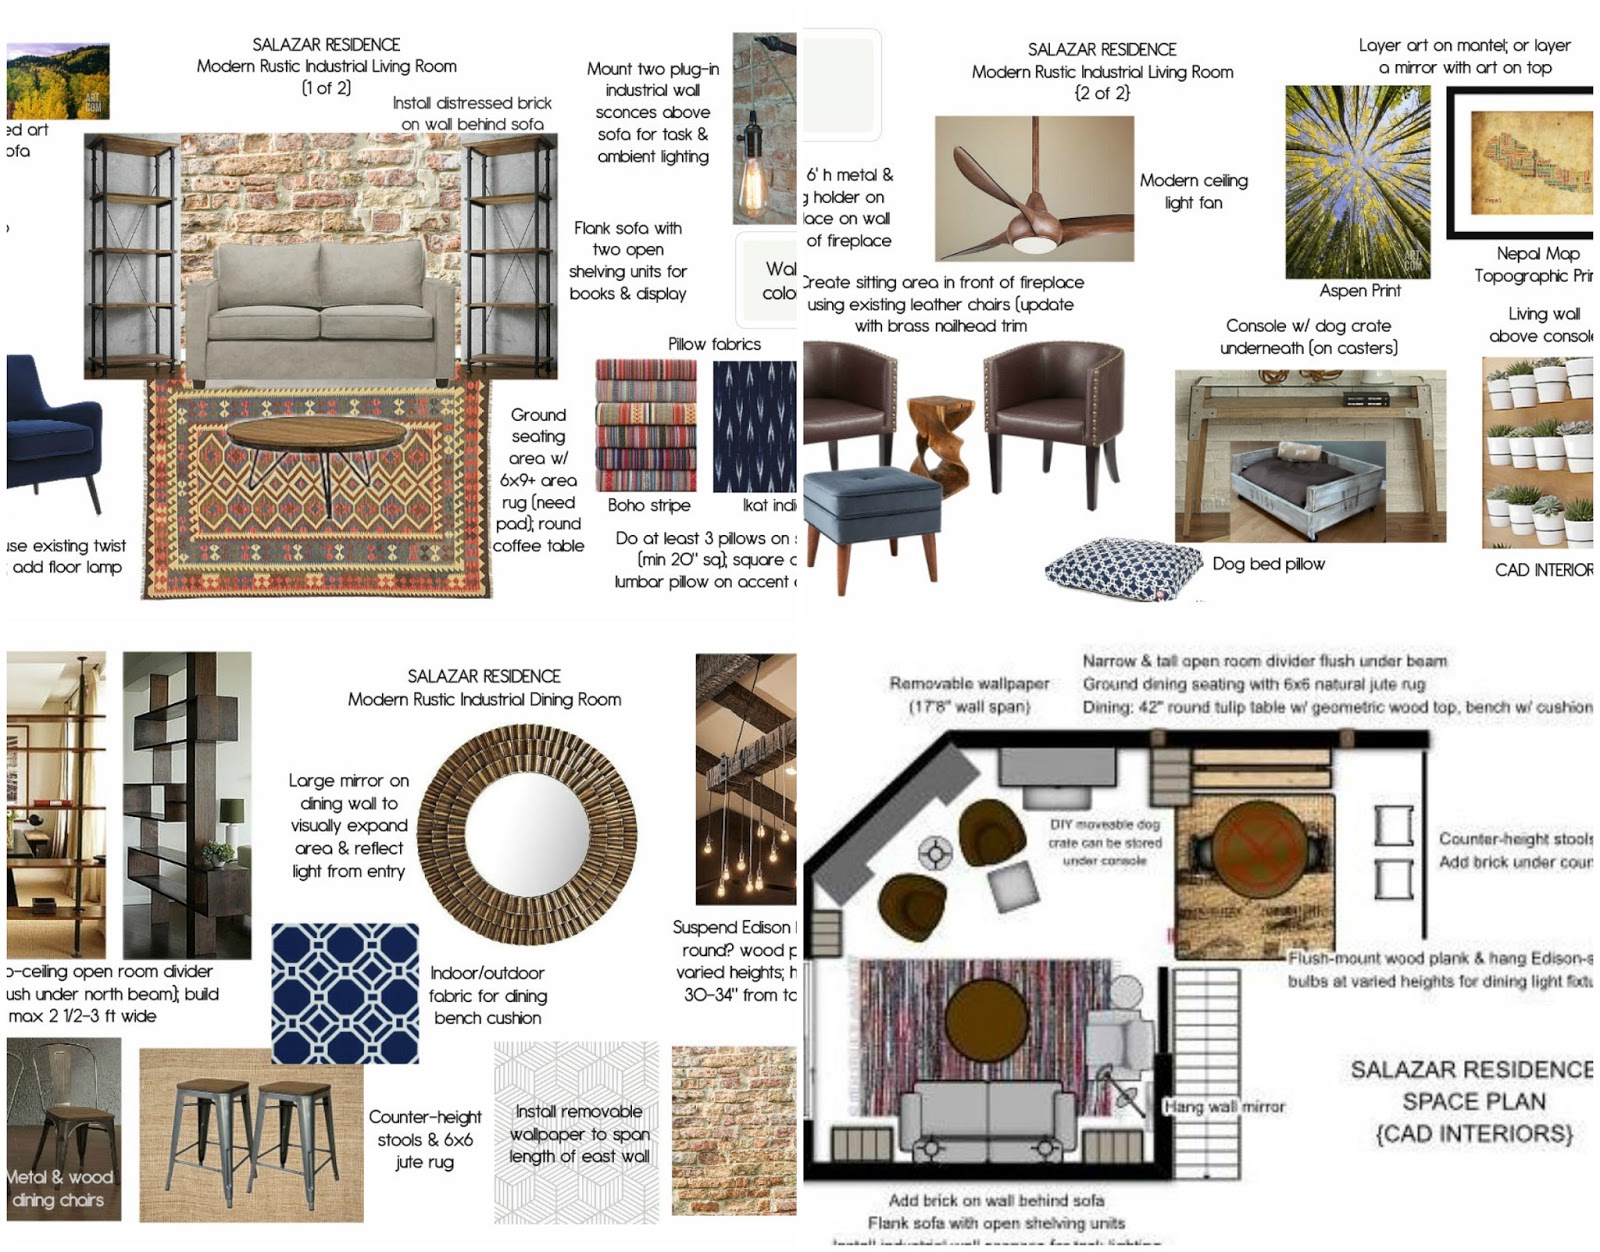 e-design online interior design service modern industrial rustic decor